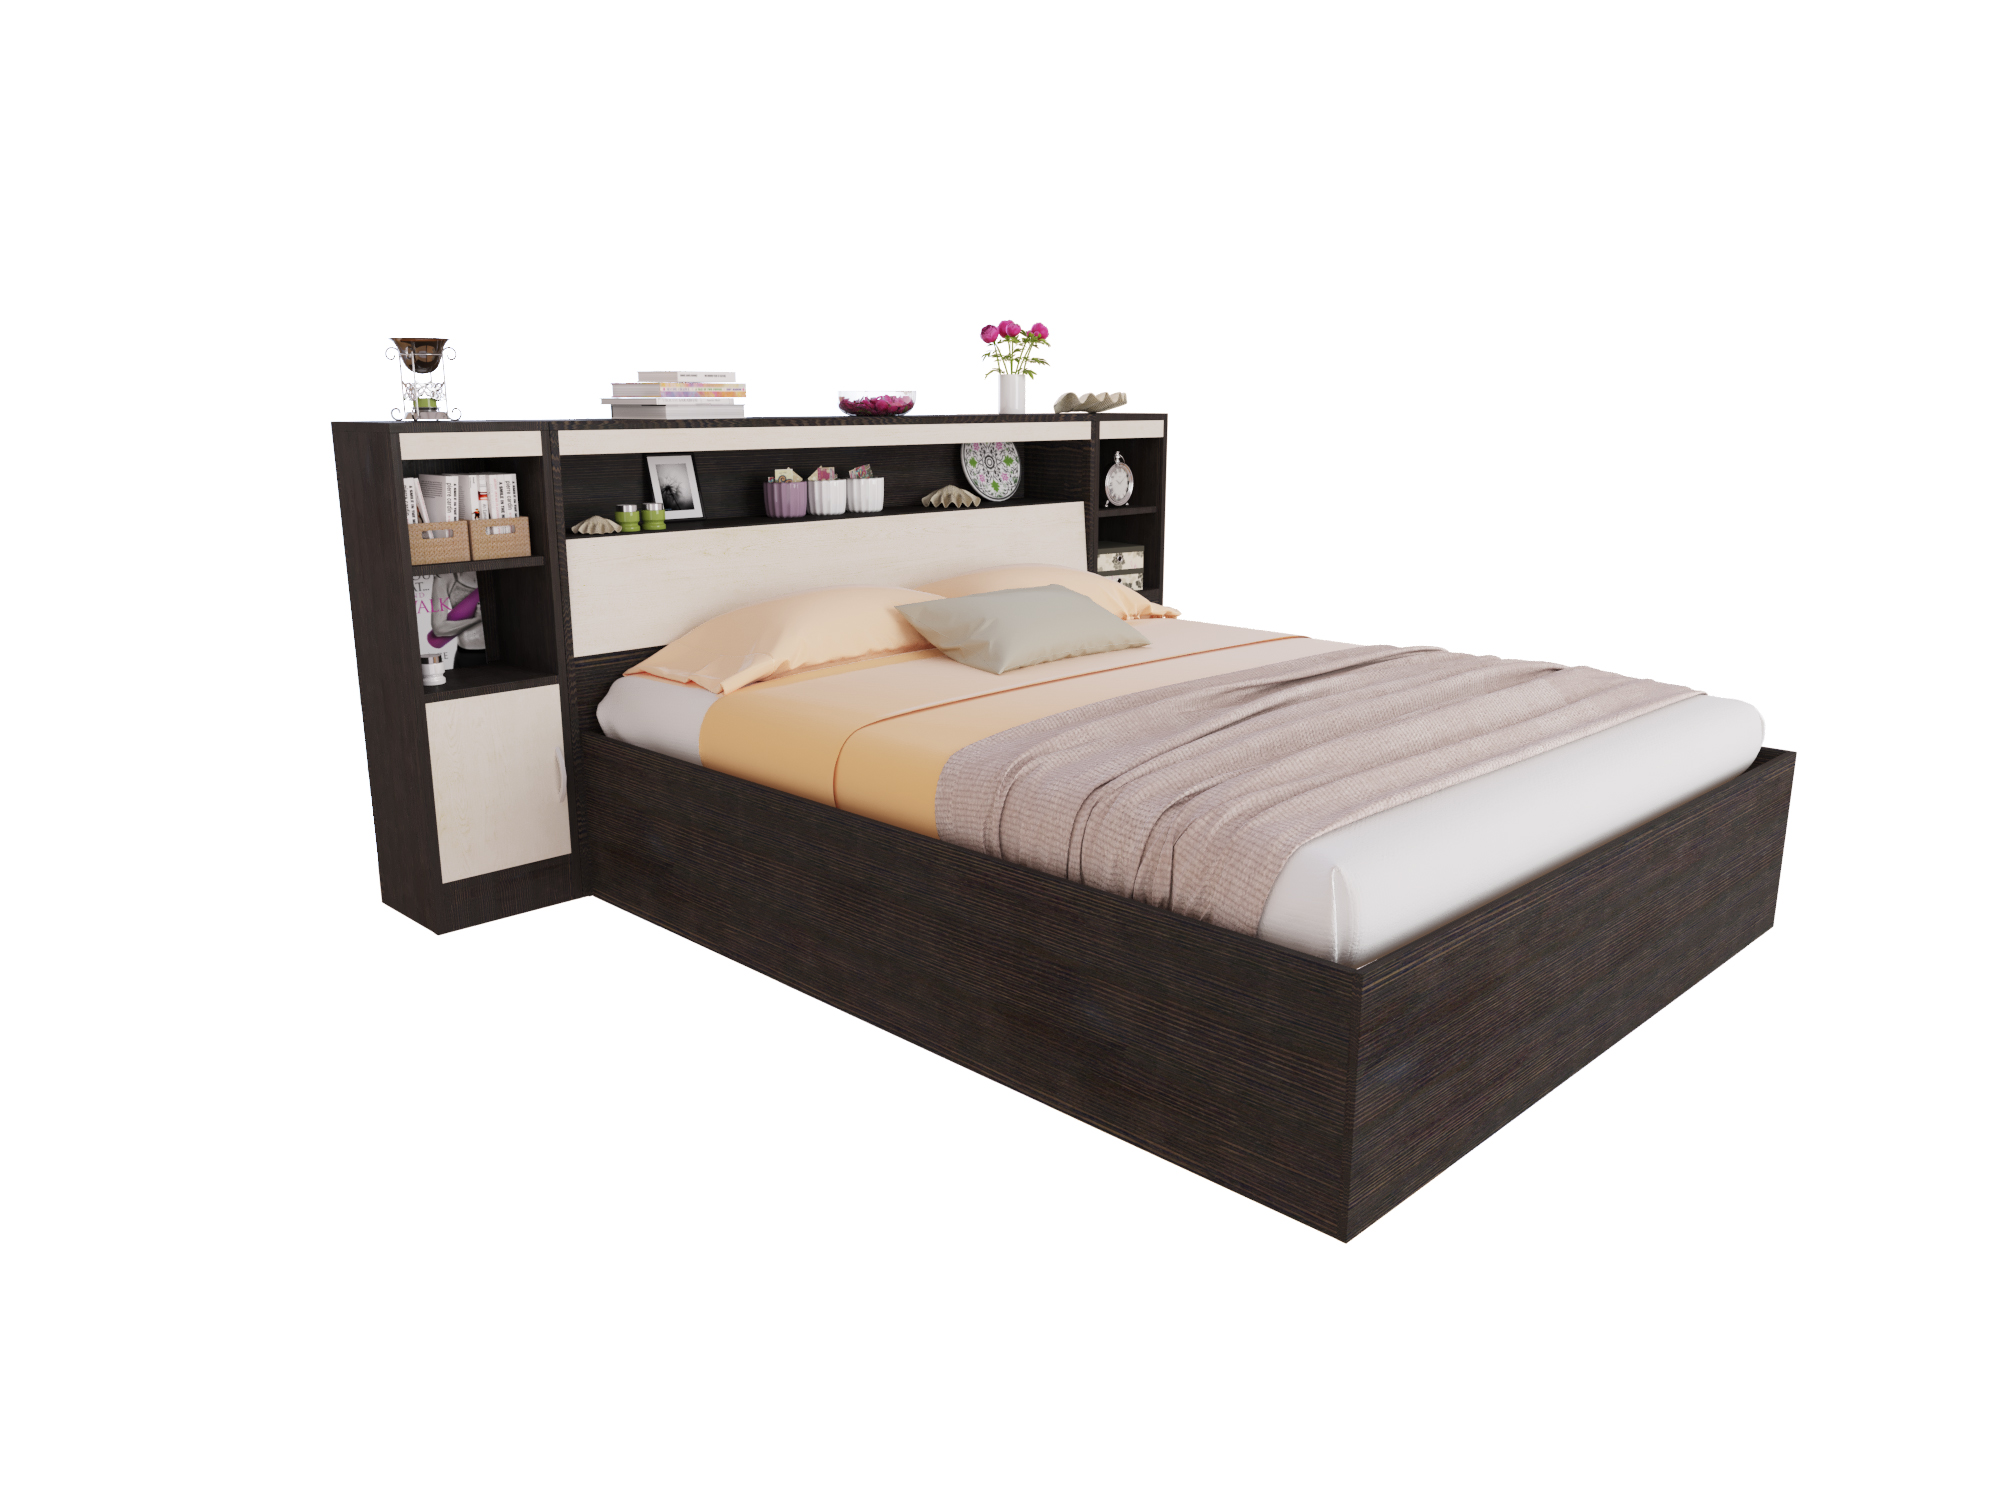 размер кровати со спальным местом 160х200